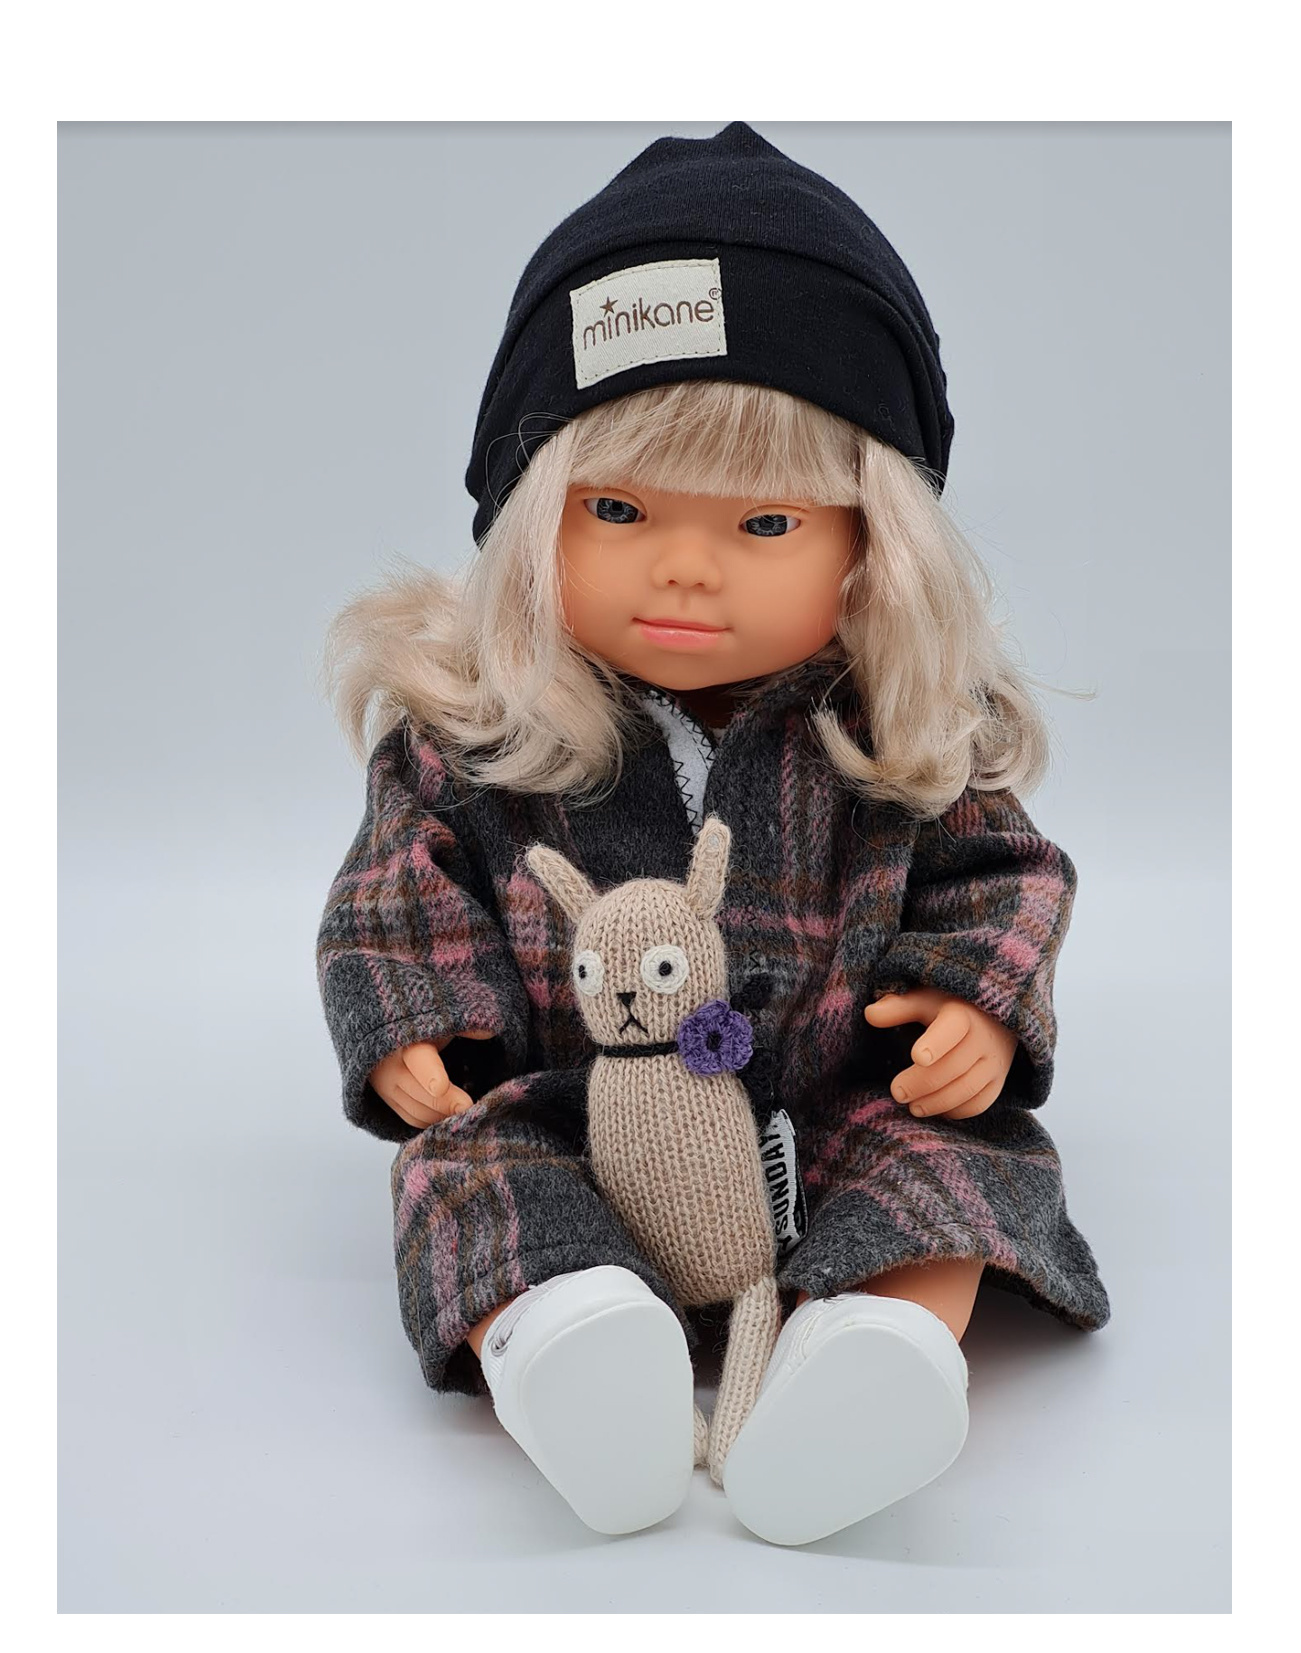 Miniland poppen Miniland doll European girl with Down Syndrome 38 cm